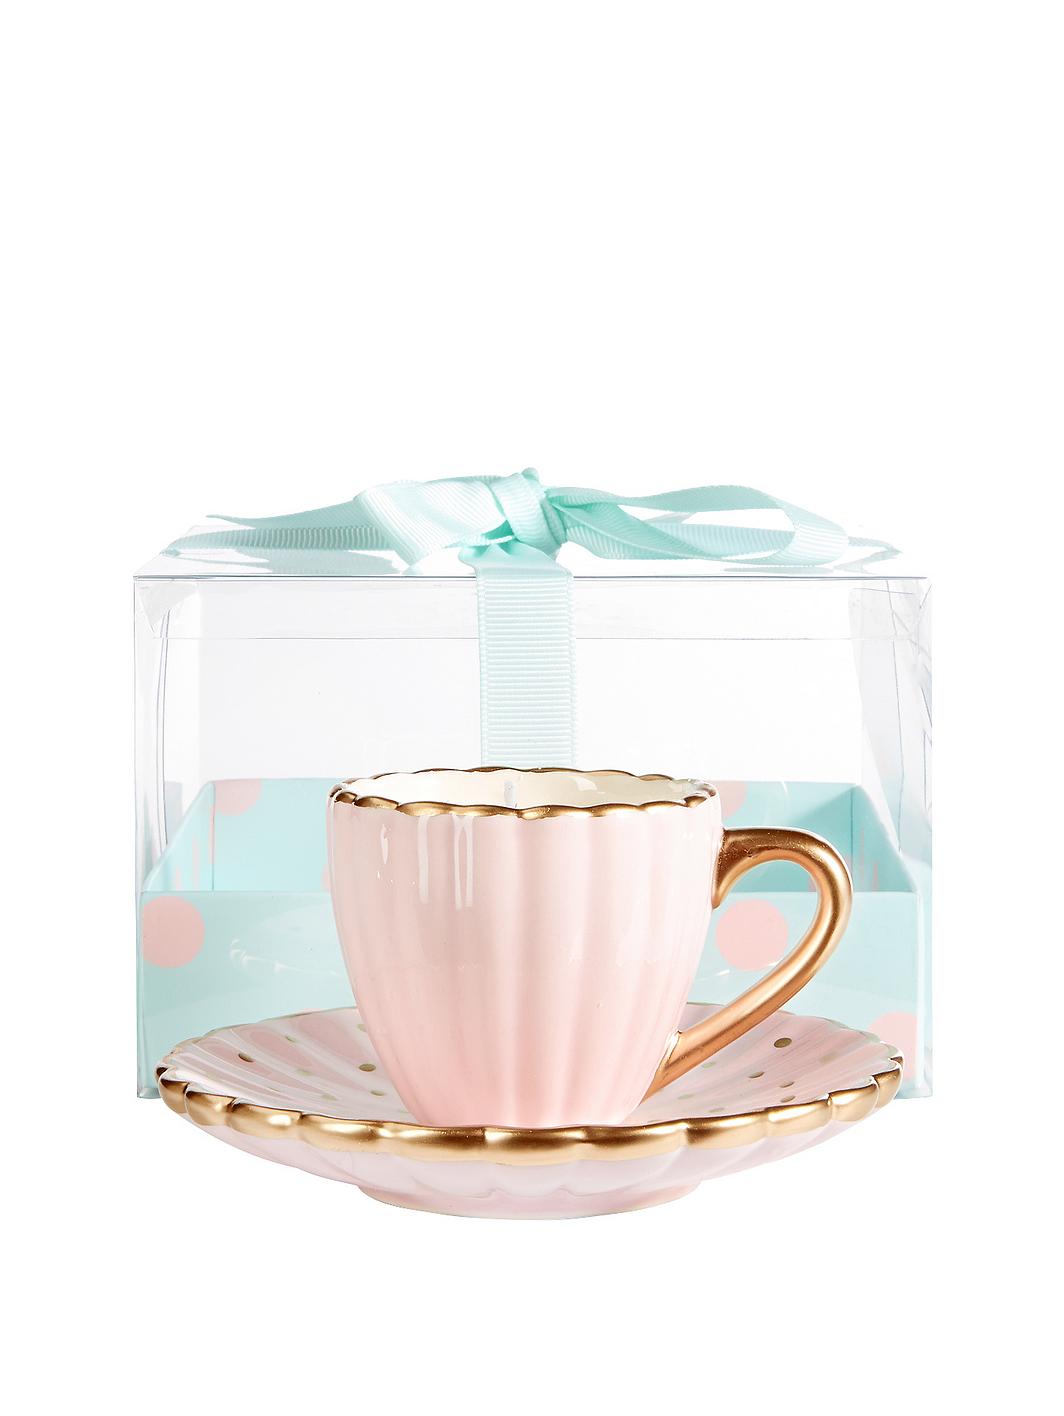 saucer vintage teacup candle.jpg?$1064x1416_standard$ saucer  teacup and chic uk vintage and